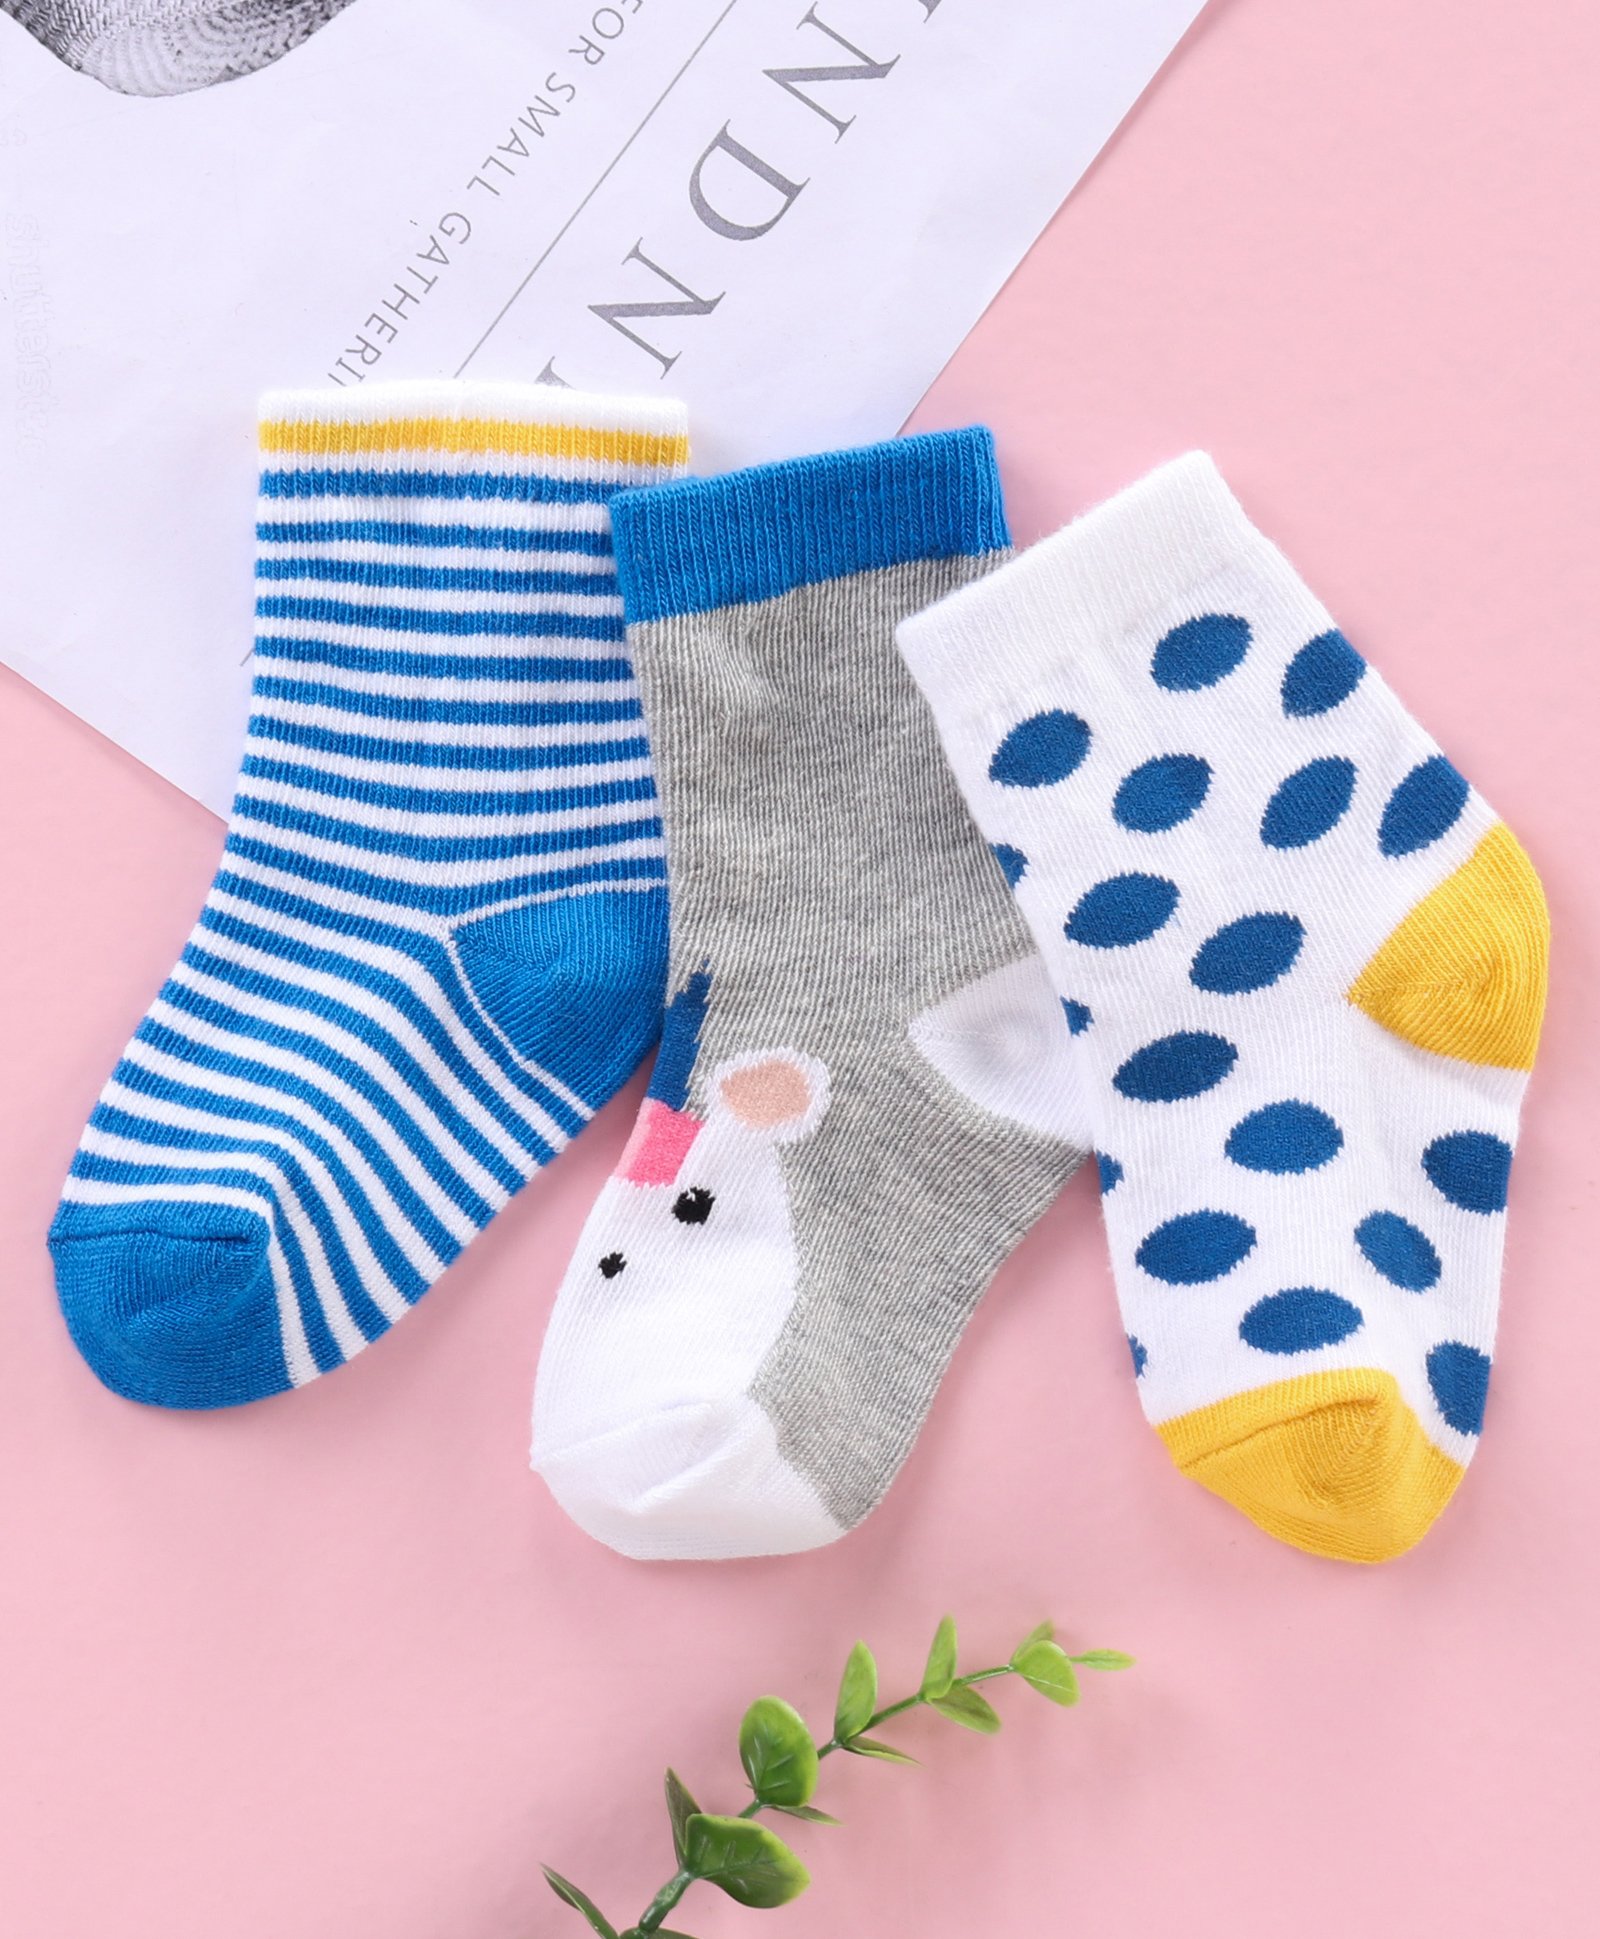 5 Packs Girls Baby Toddler Cute Cotton Socks with Unicorn/Rabbit Pattern